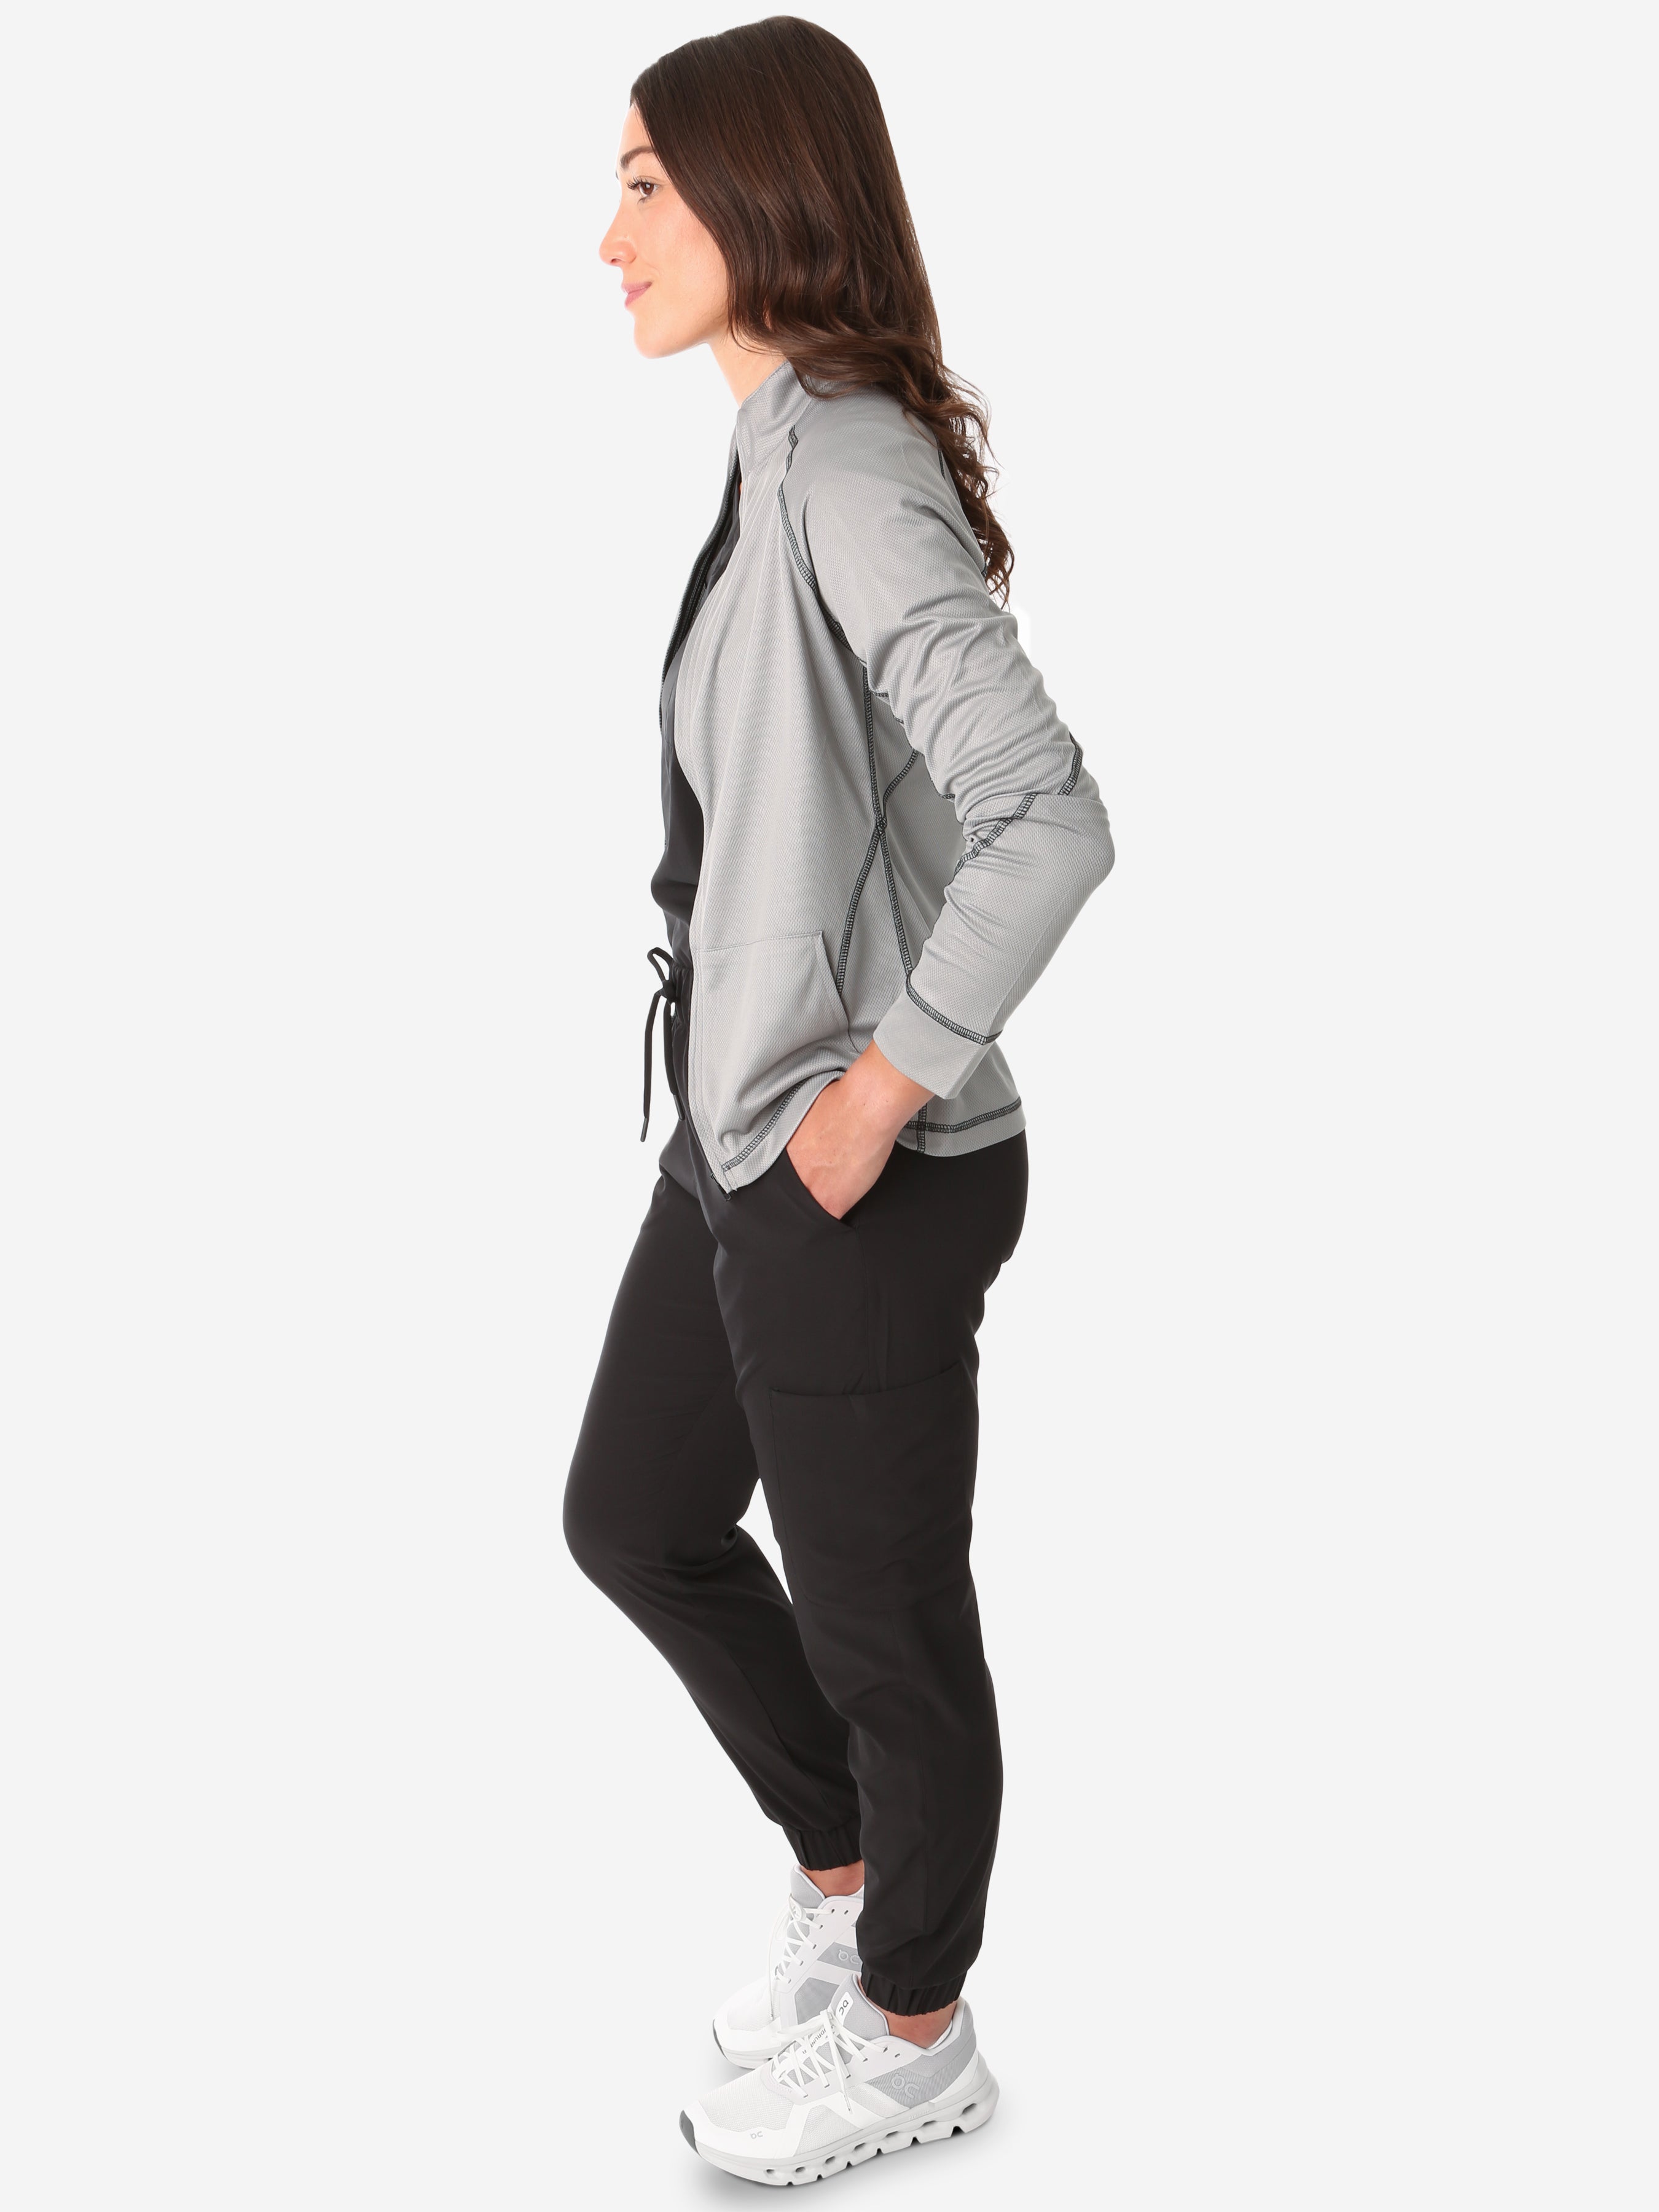 Women's Mesh Scrub Jacket Titanium Gray Side View Full Body Plus Black Stretch Scrubs